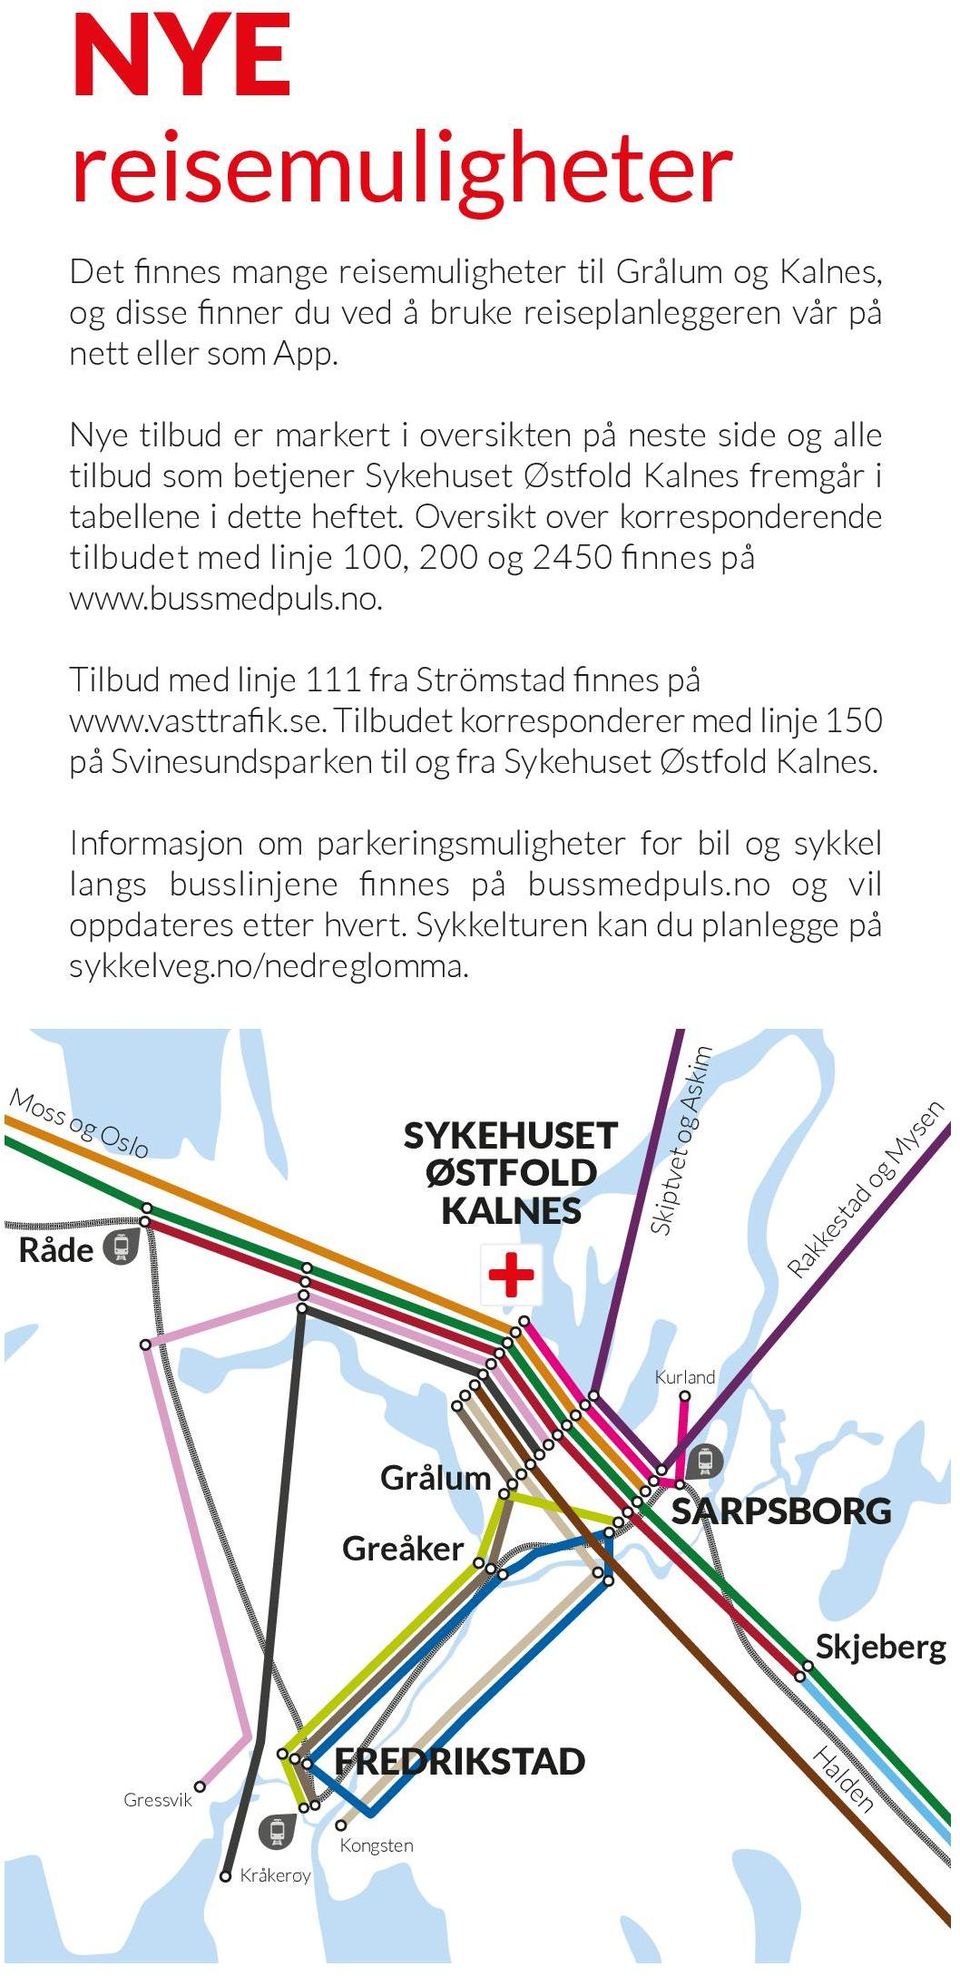 Oversikt over korresponderende tilbudet med linje 100, 200 og 2450 finnes på www.bussmedpuls.no. Tilbud med linje 111 fra Strömstad finnes på www.vasttrafik.se.